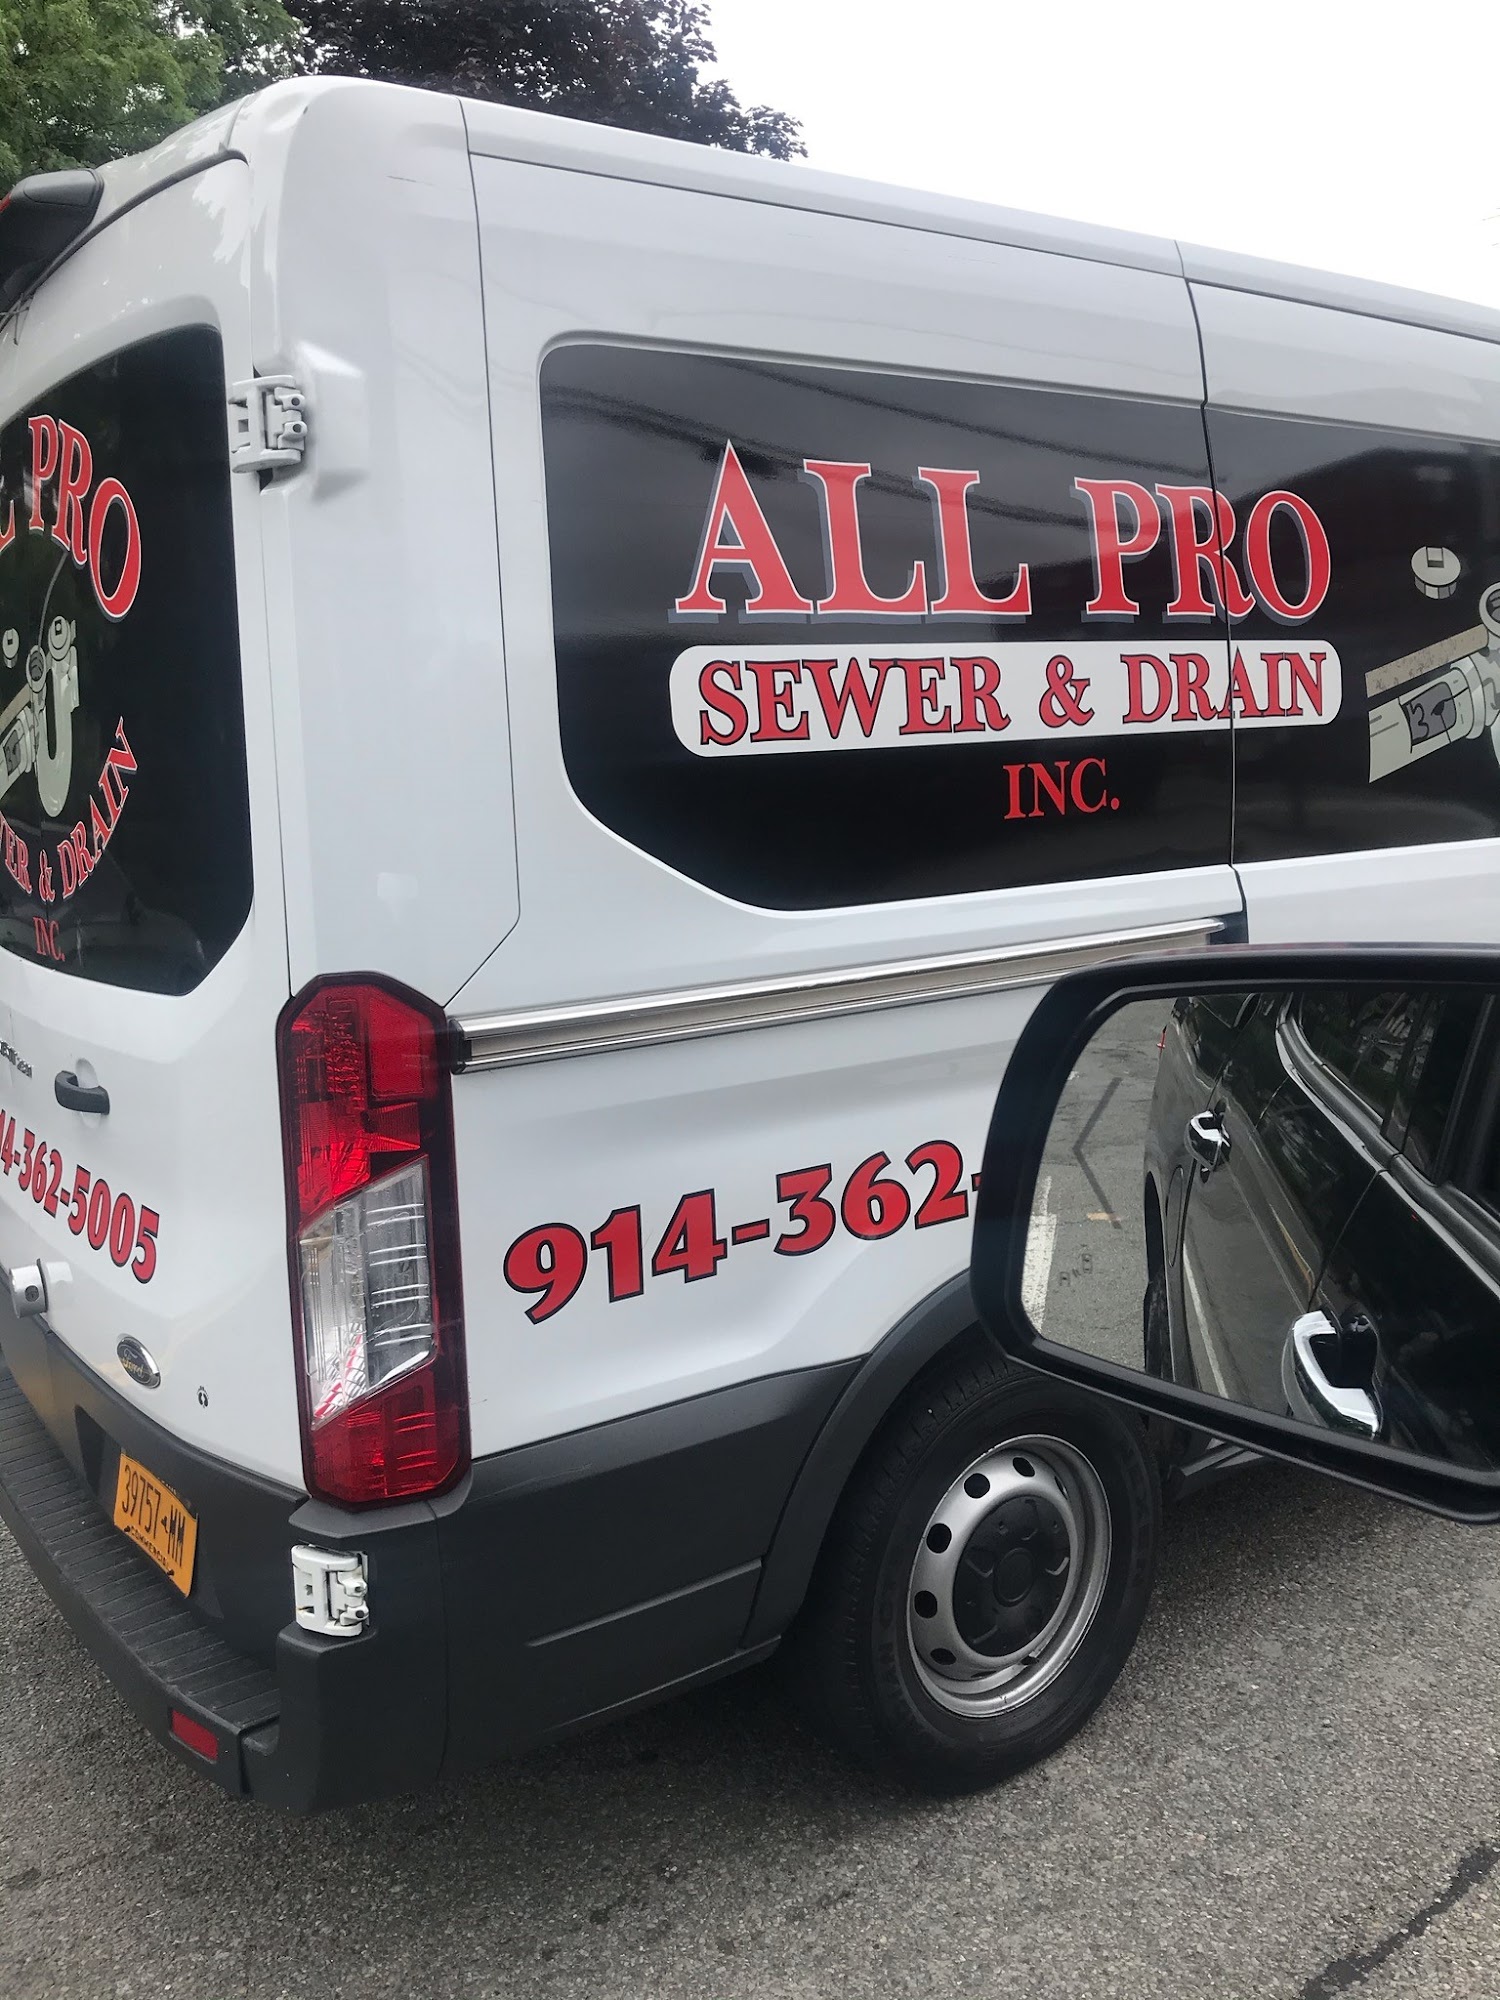 All-Pro Sewer & Drain Corp